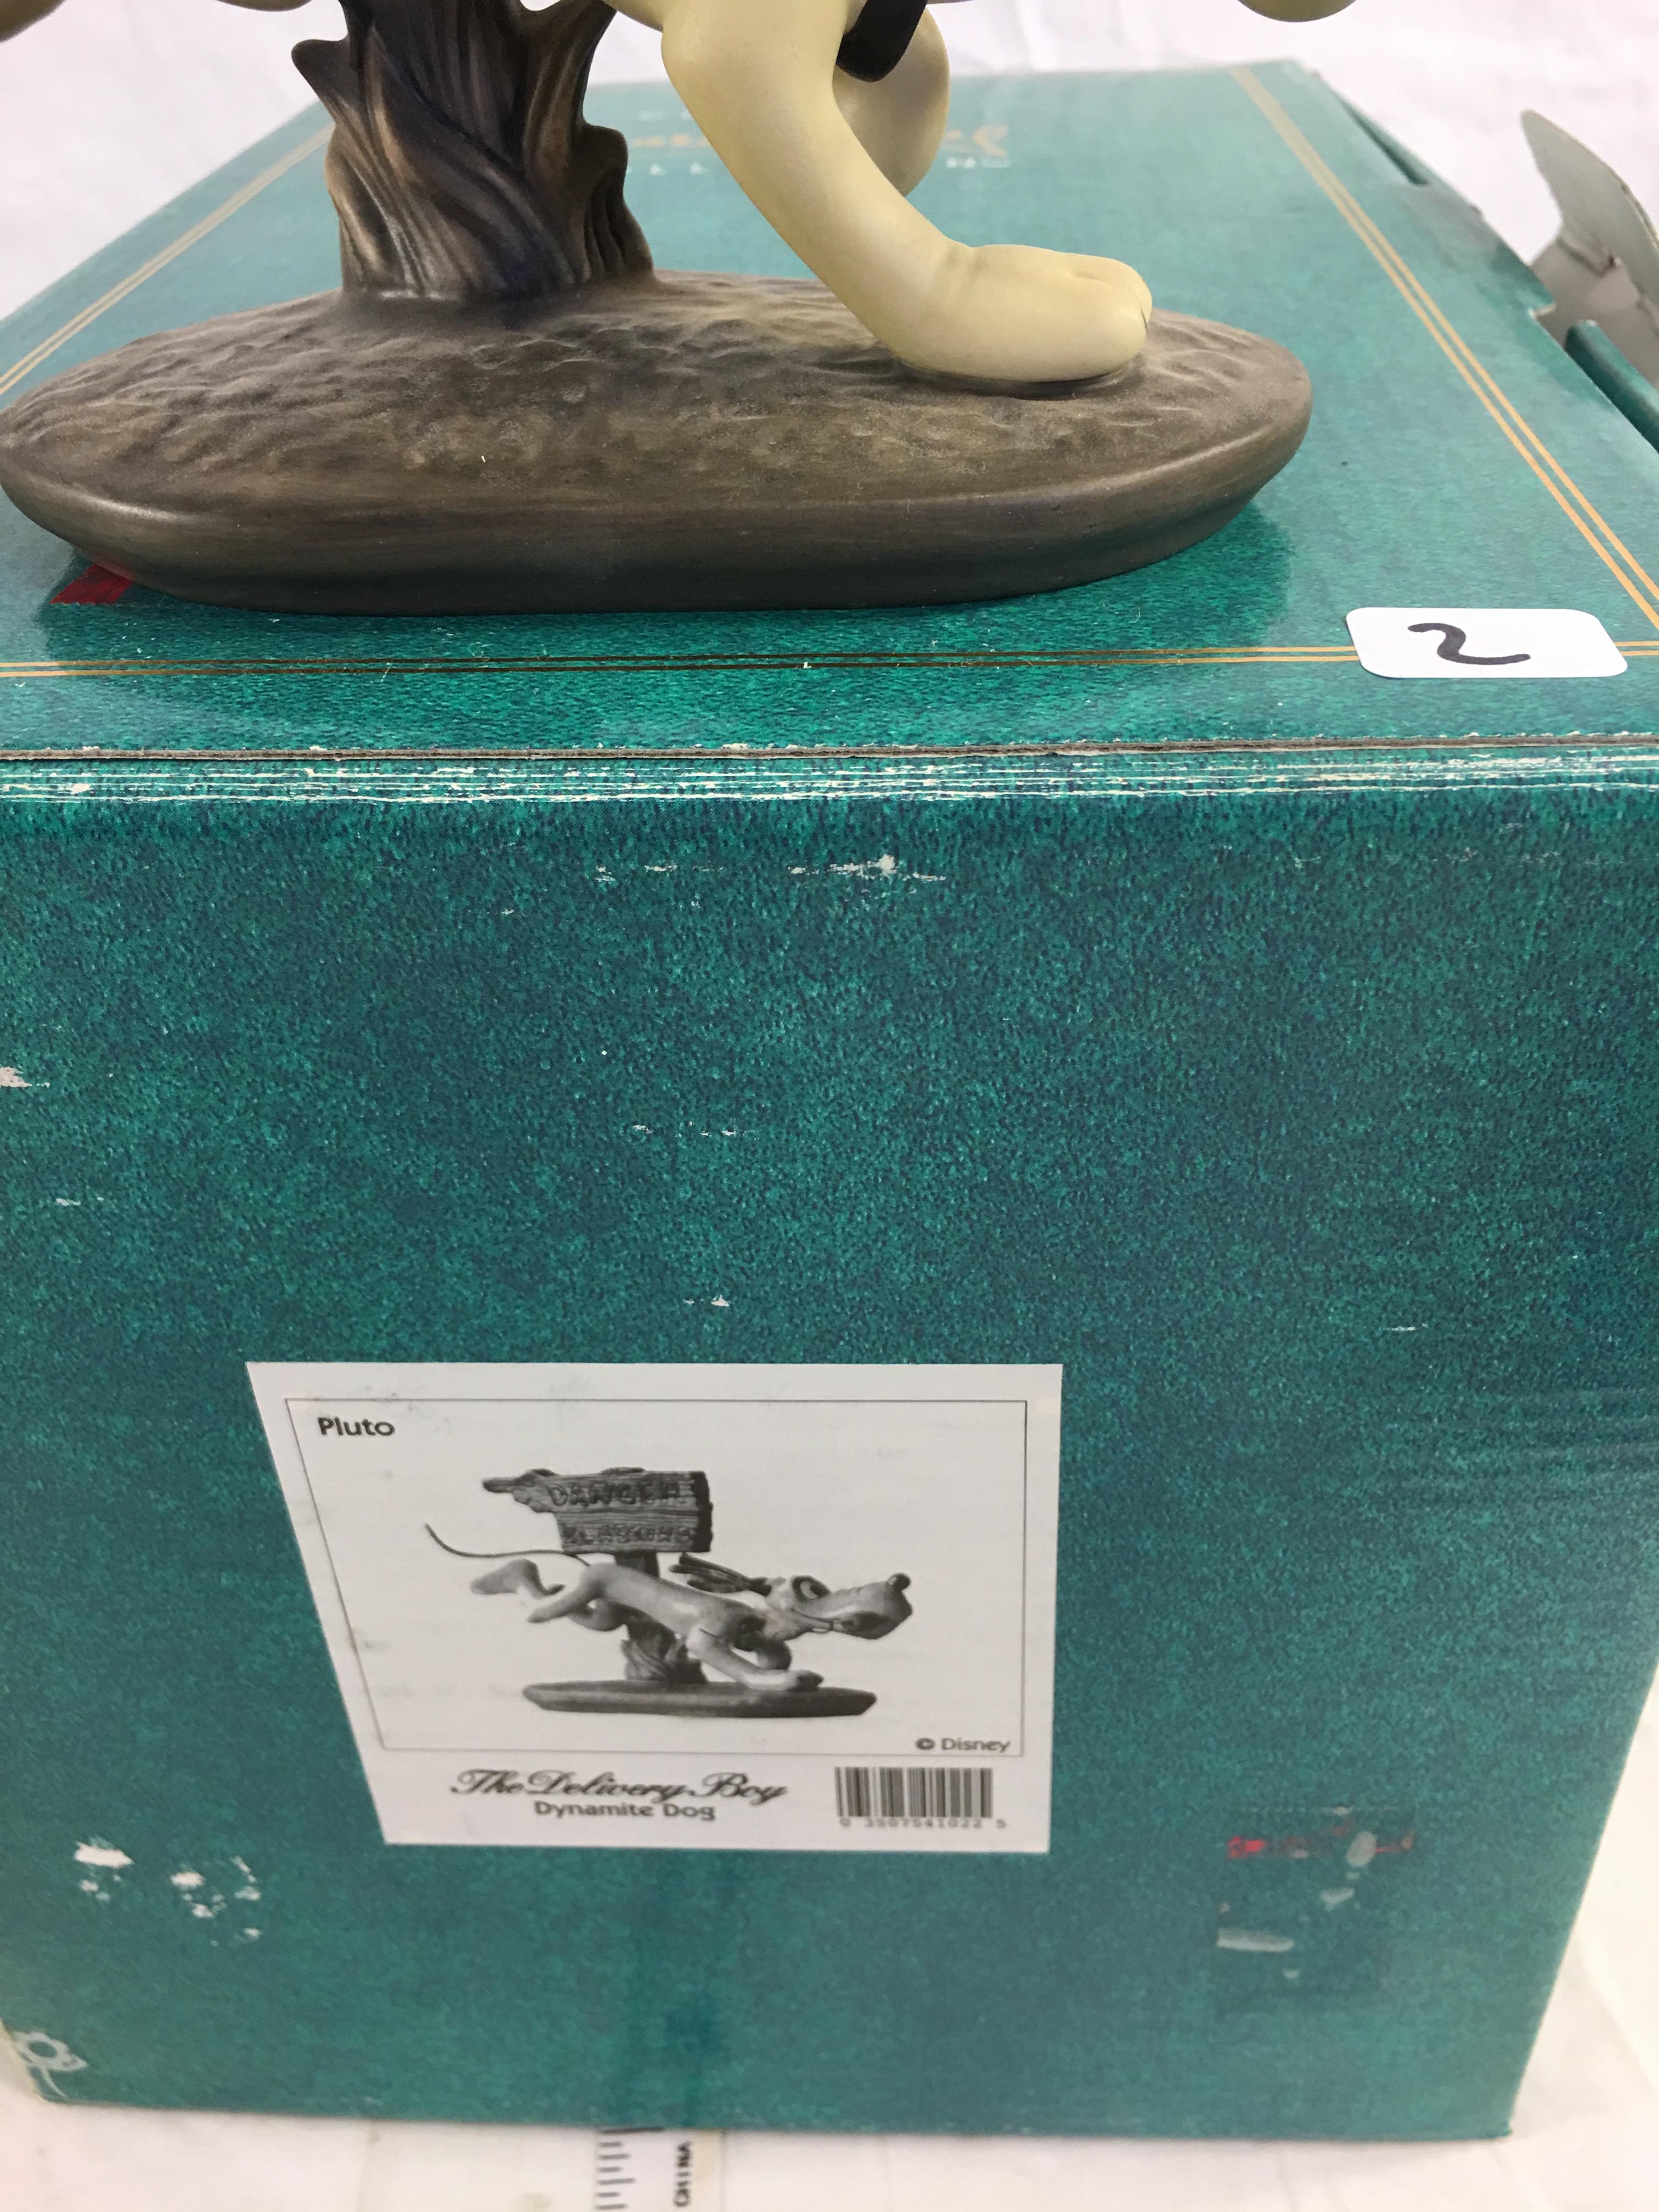 Collector Walt Disney The Delivery Bnoy Pluto Dynamite do Figurine Box 11.5x7.5x7.5"